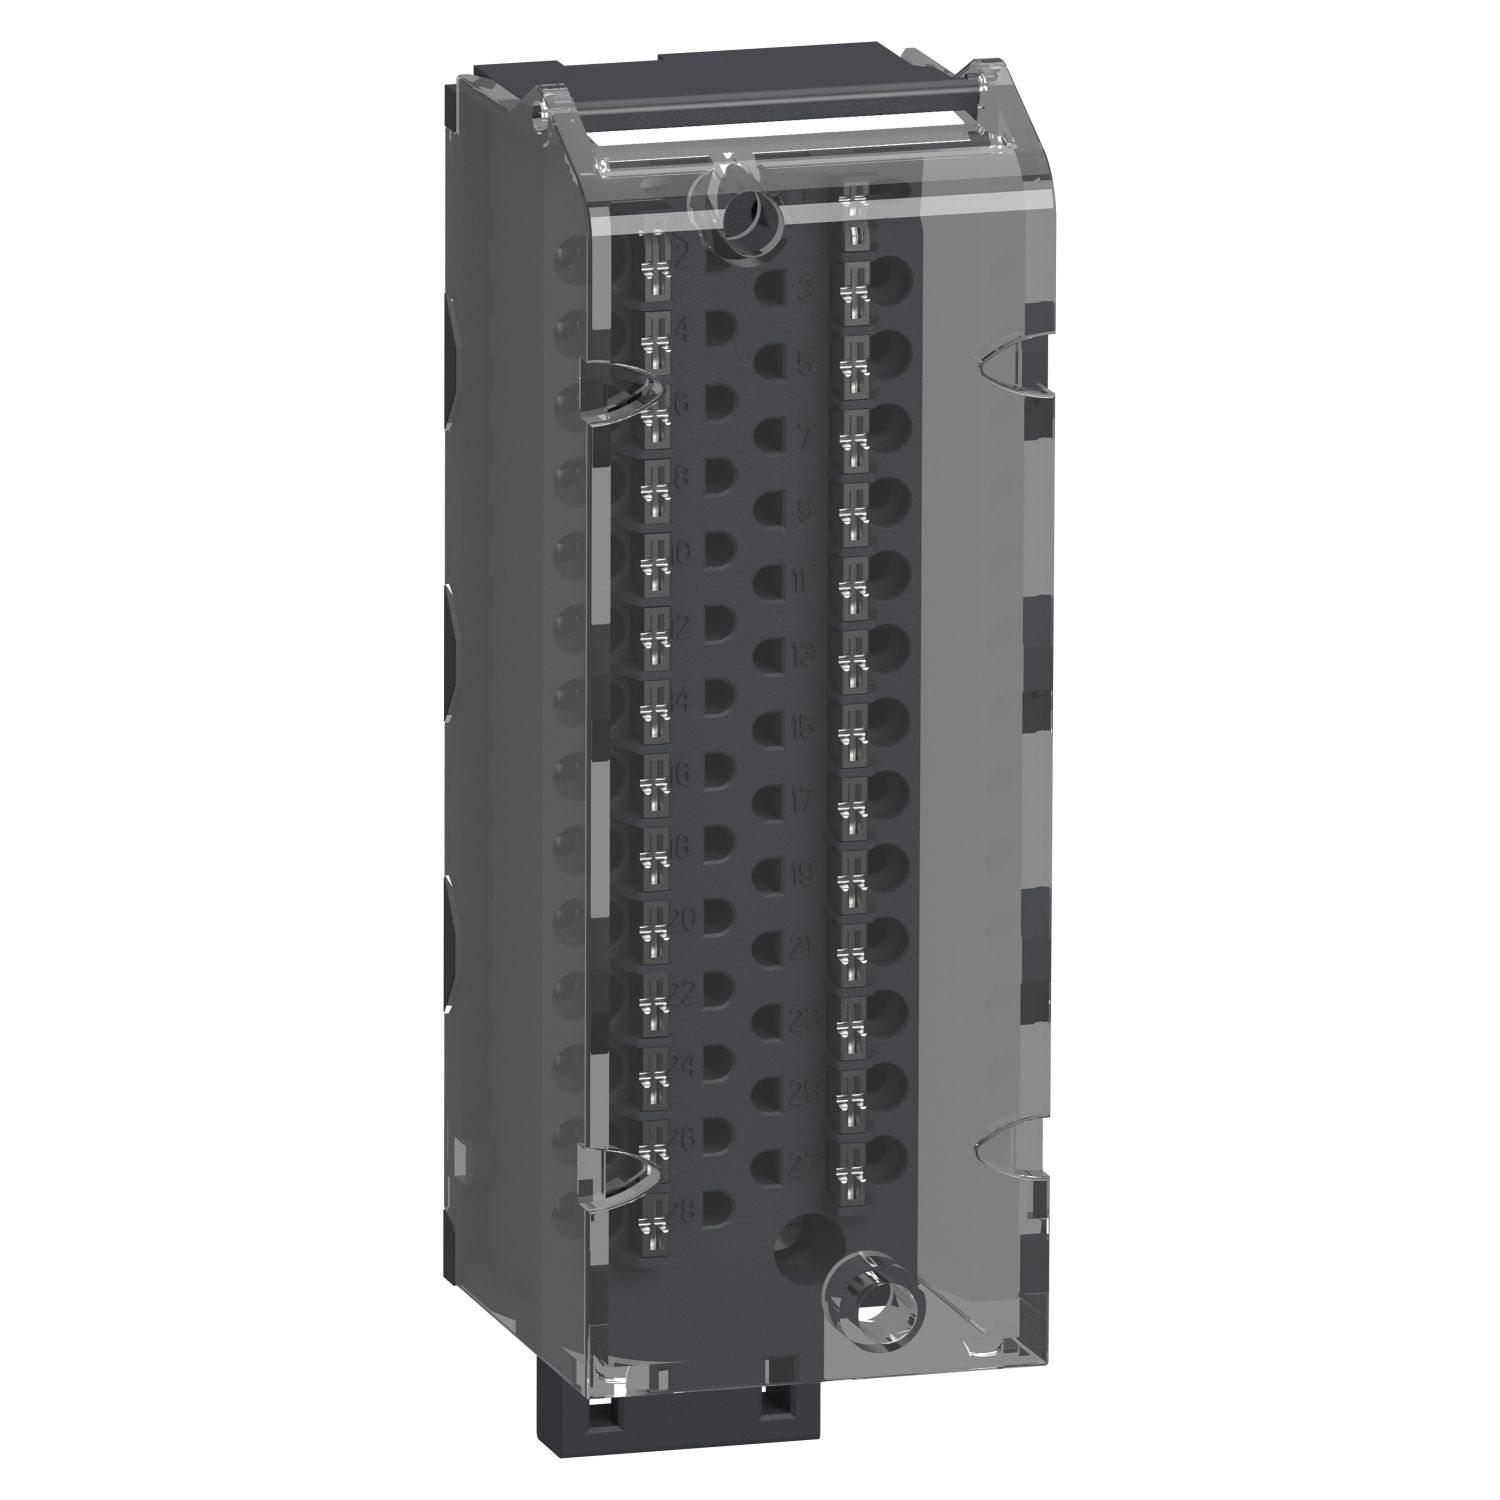 BMXFTB2820 28-pin removable spring terminal blocks - 1 x 0.34..1 mm2